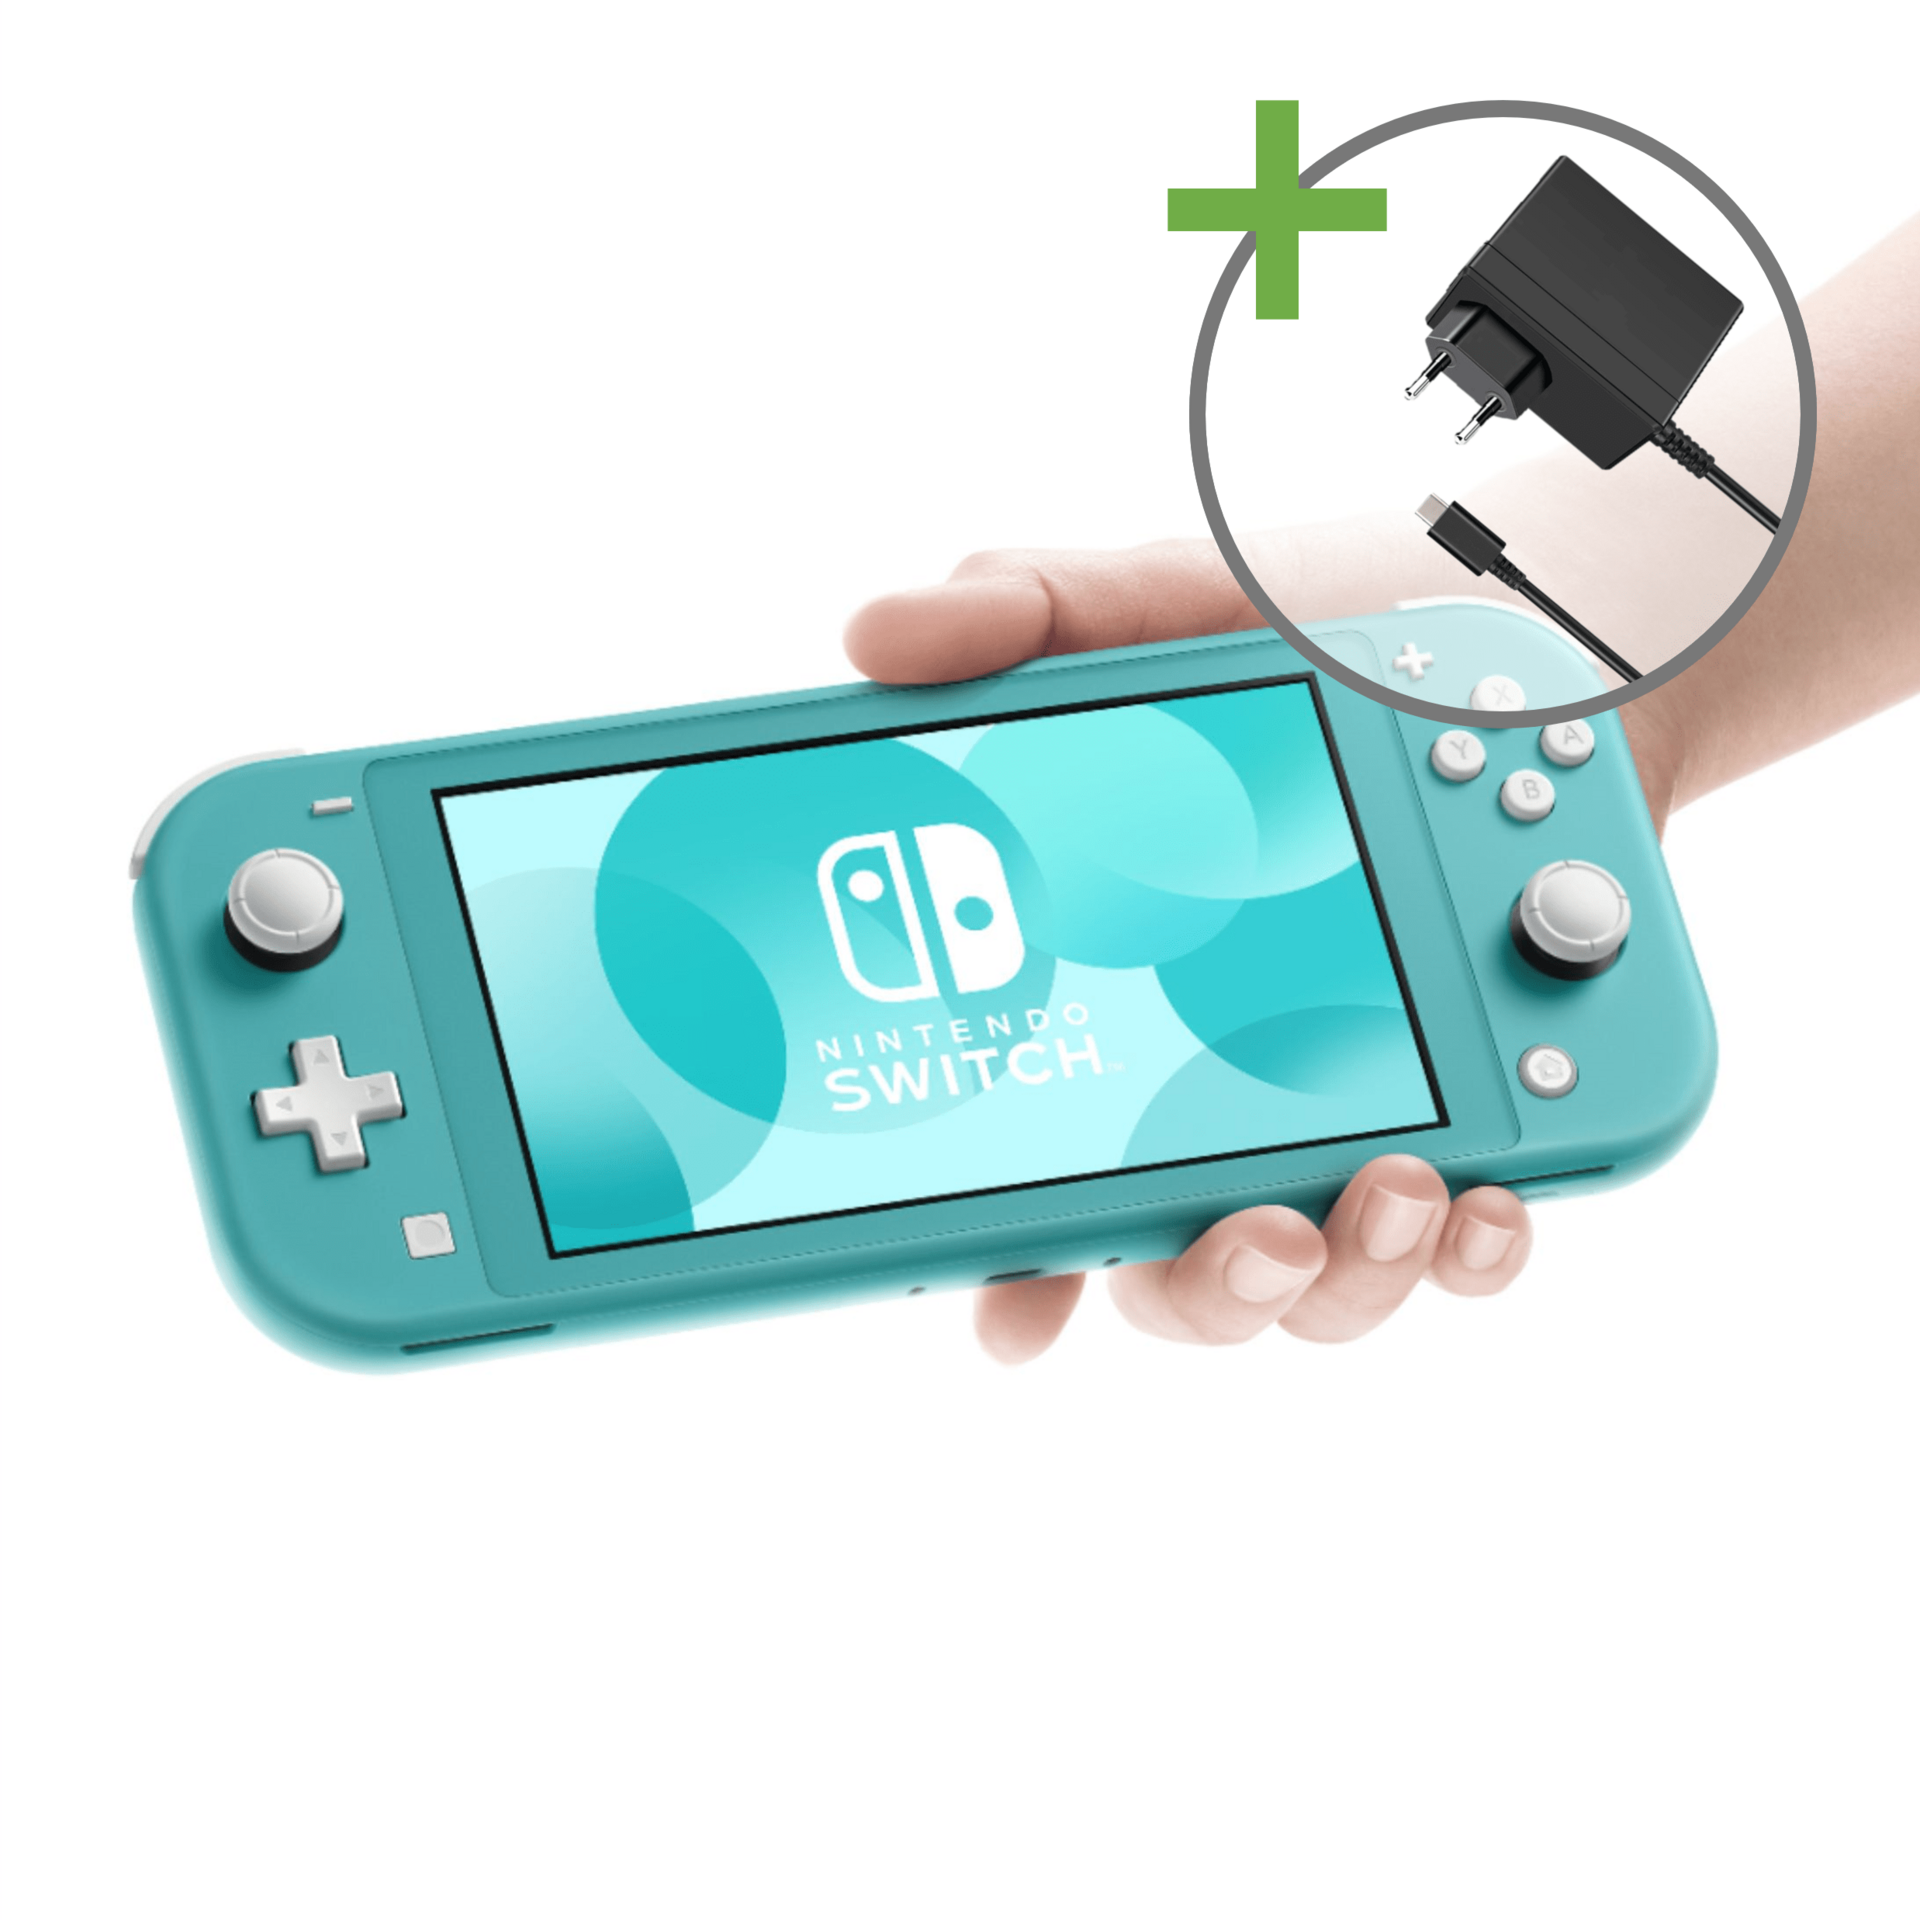 Nintendo Switch Lite Console - Turquoise - Nintendo Switch Hardware - 2